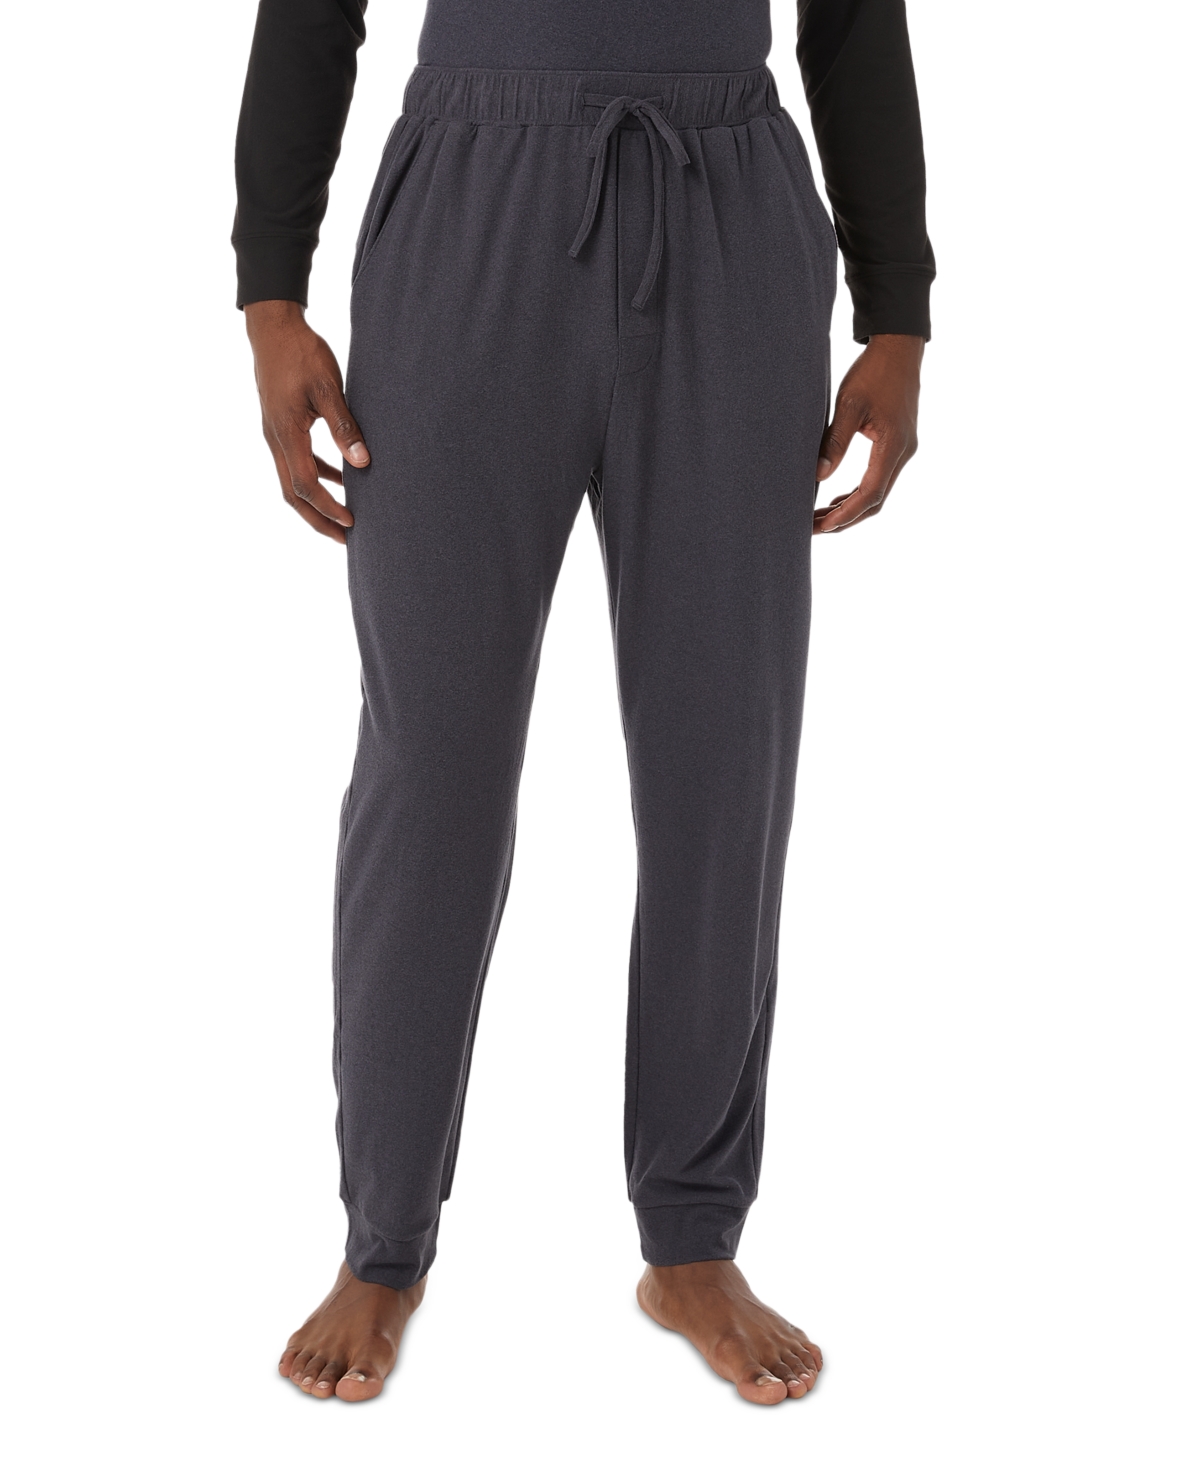 Men's Plush Heat Pajama Pants - Htrichplum